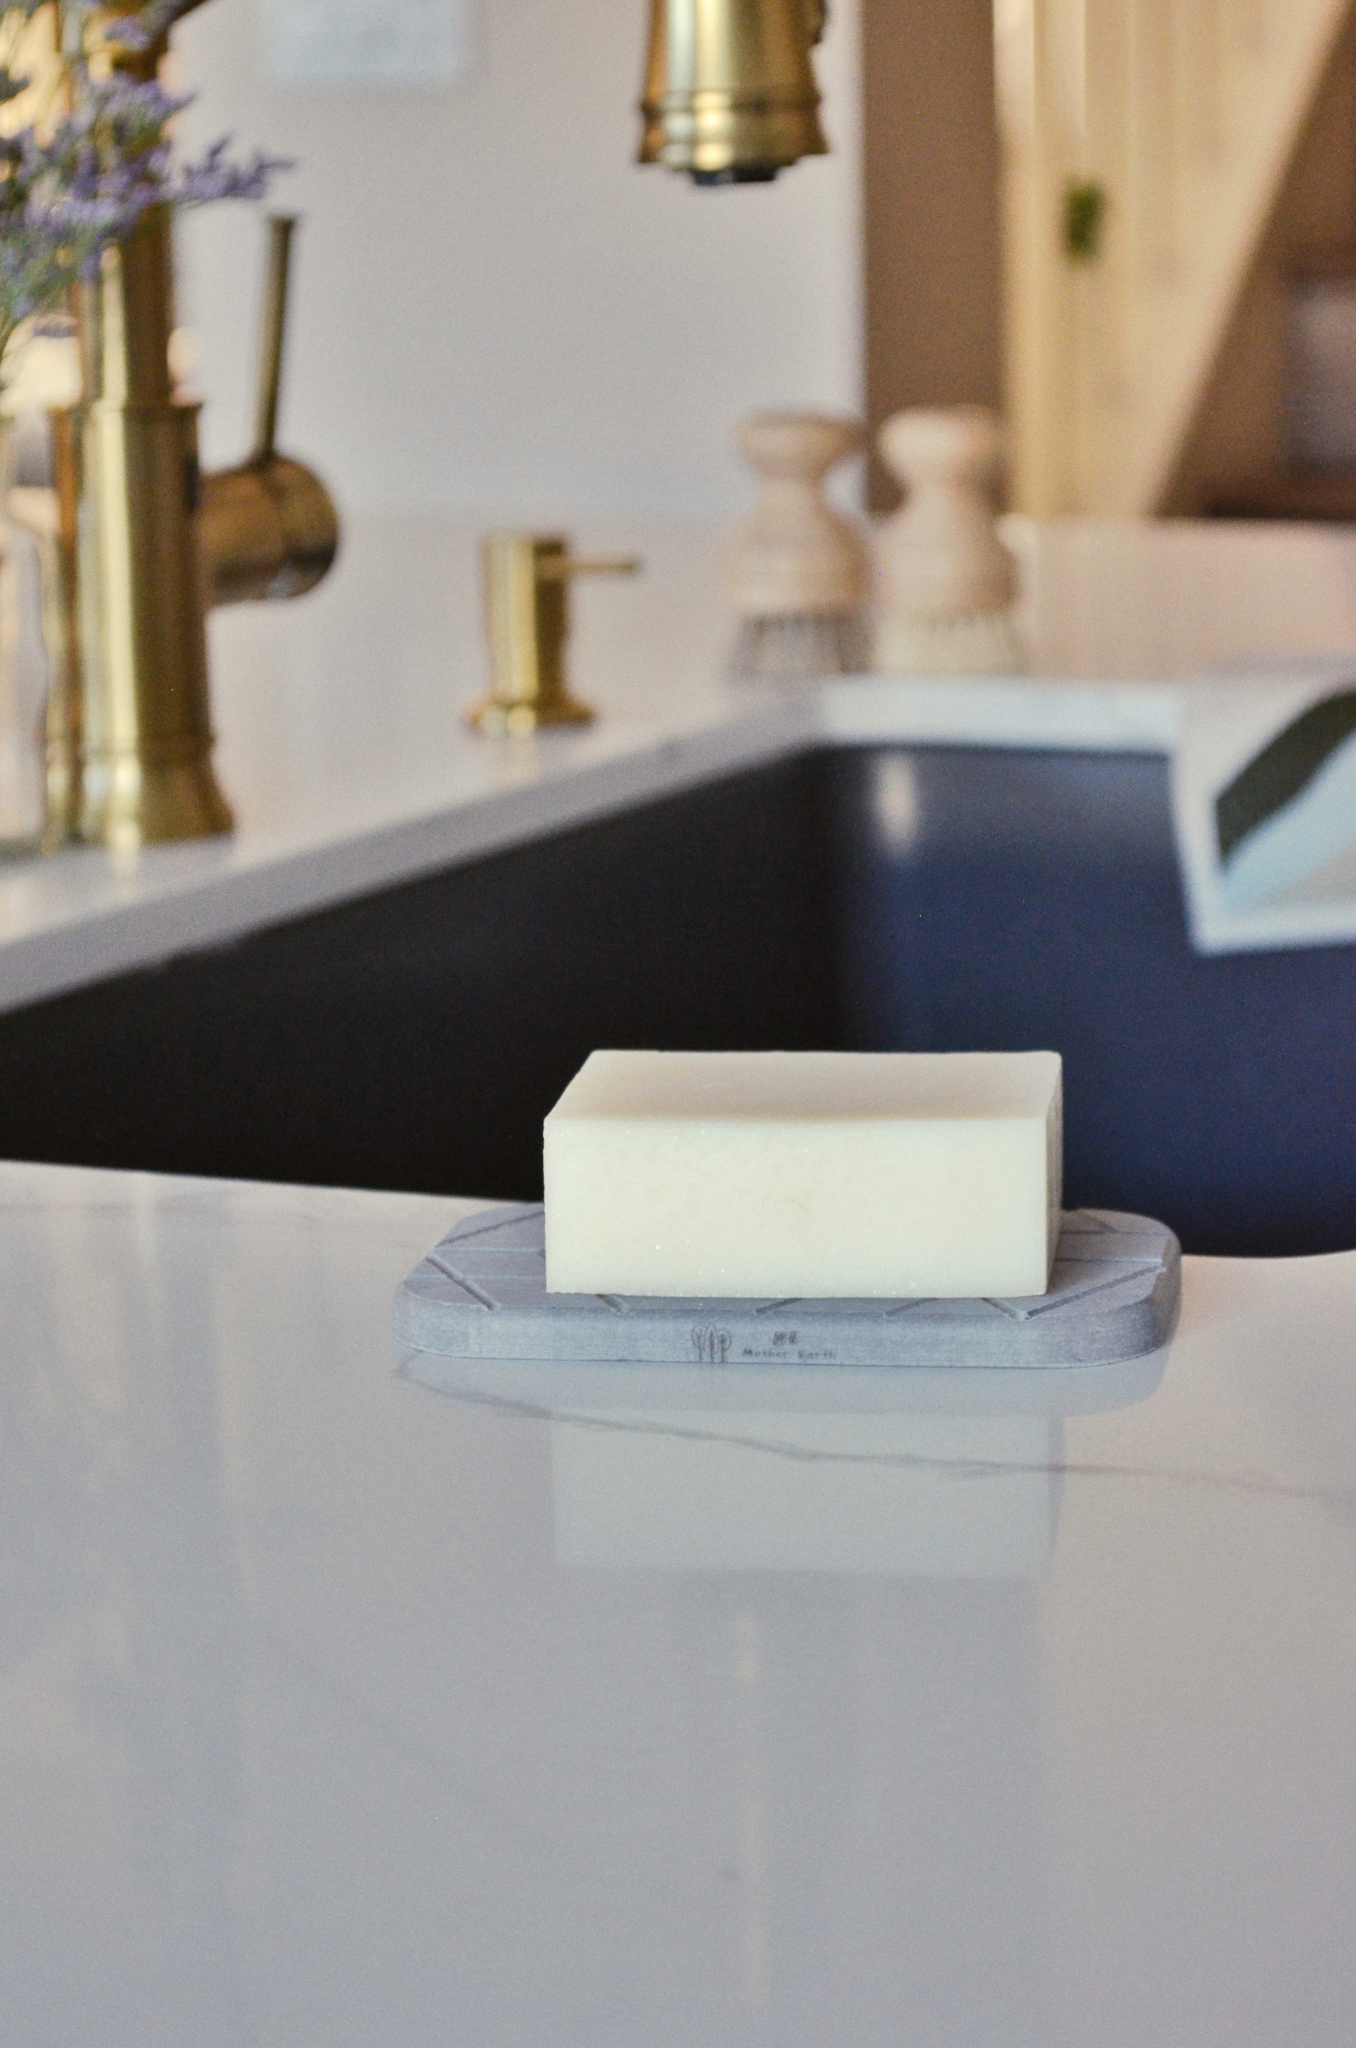 Geometric Quick-Dry Diatomite Soap Dish